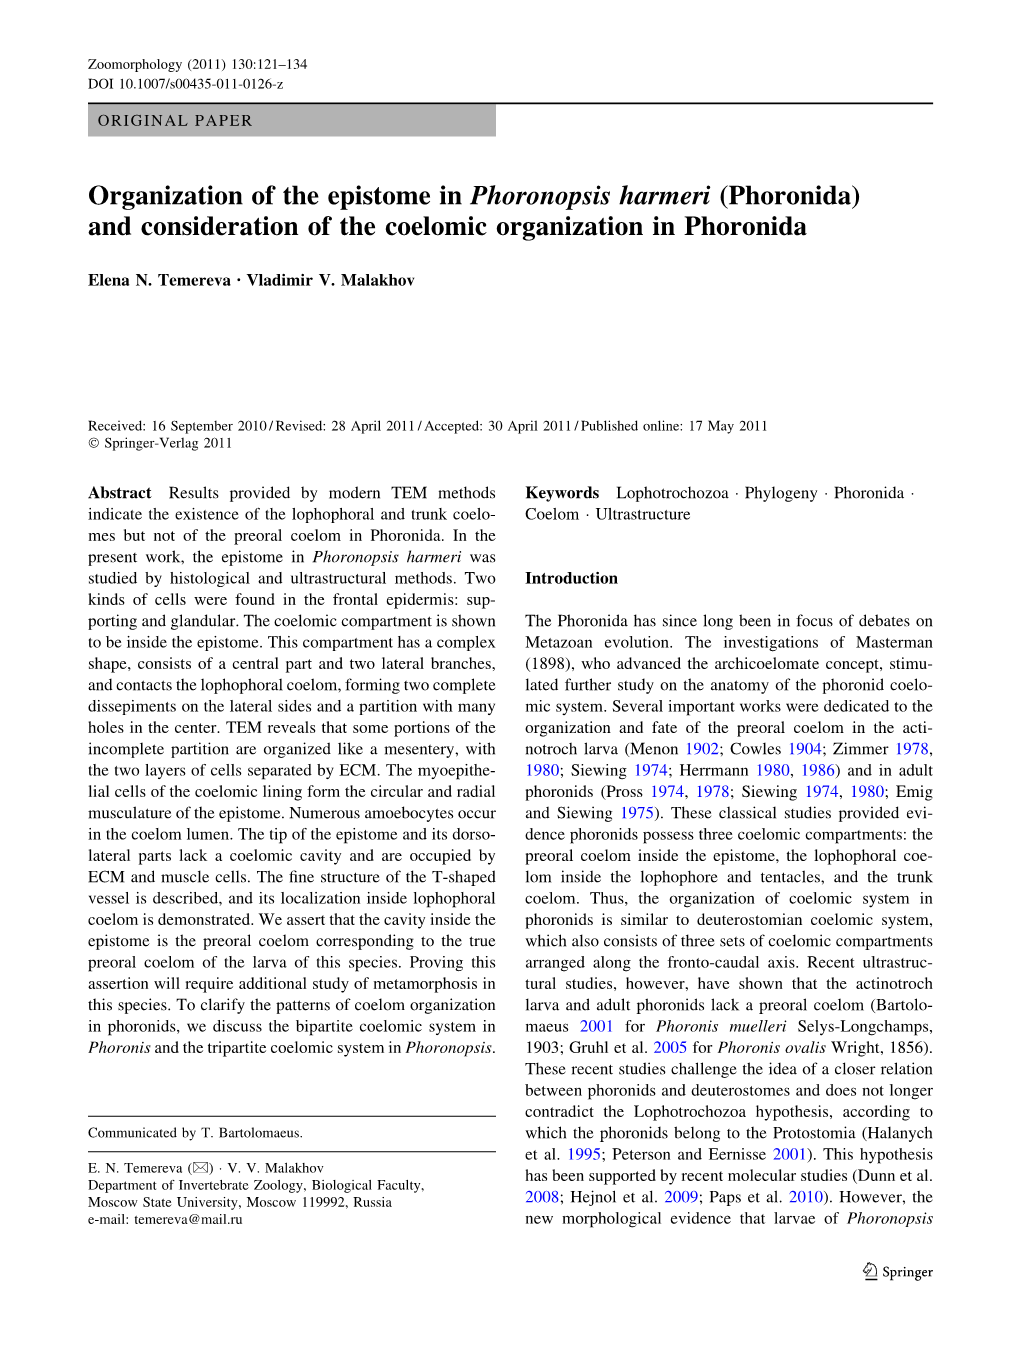 Organization of the Epistome in Phoronopsis Harmeri (Phoronida) and Consideration of the Coelomic Organization in Phoronida